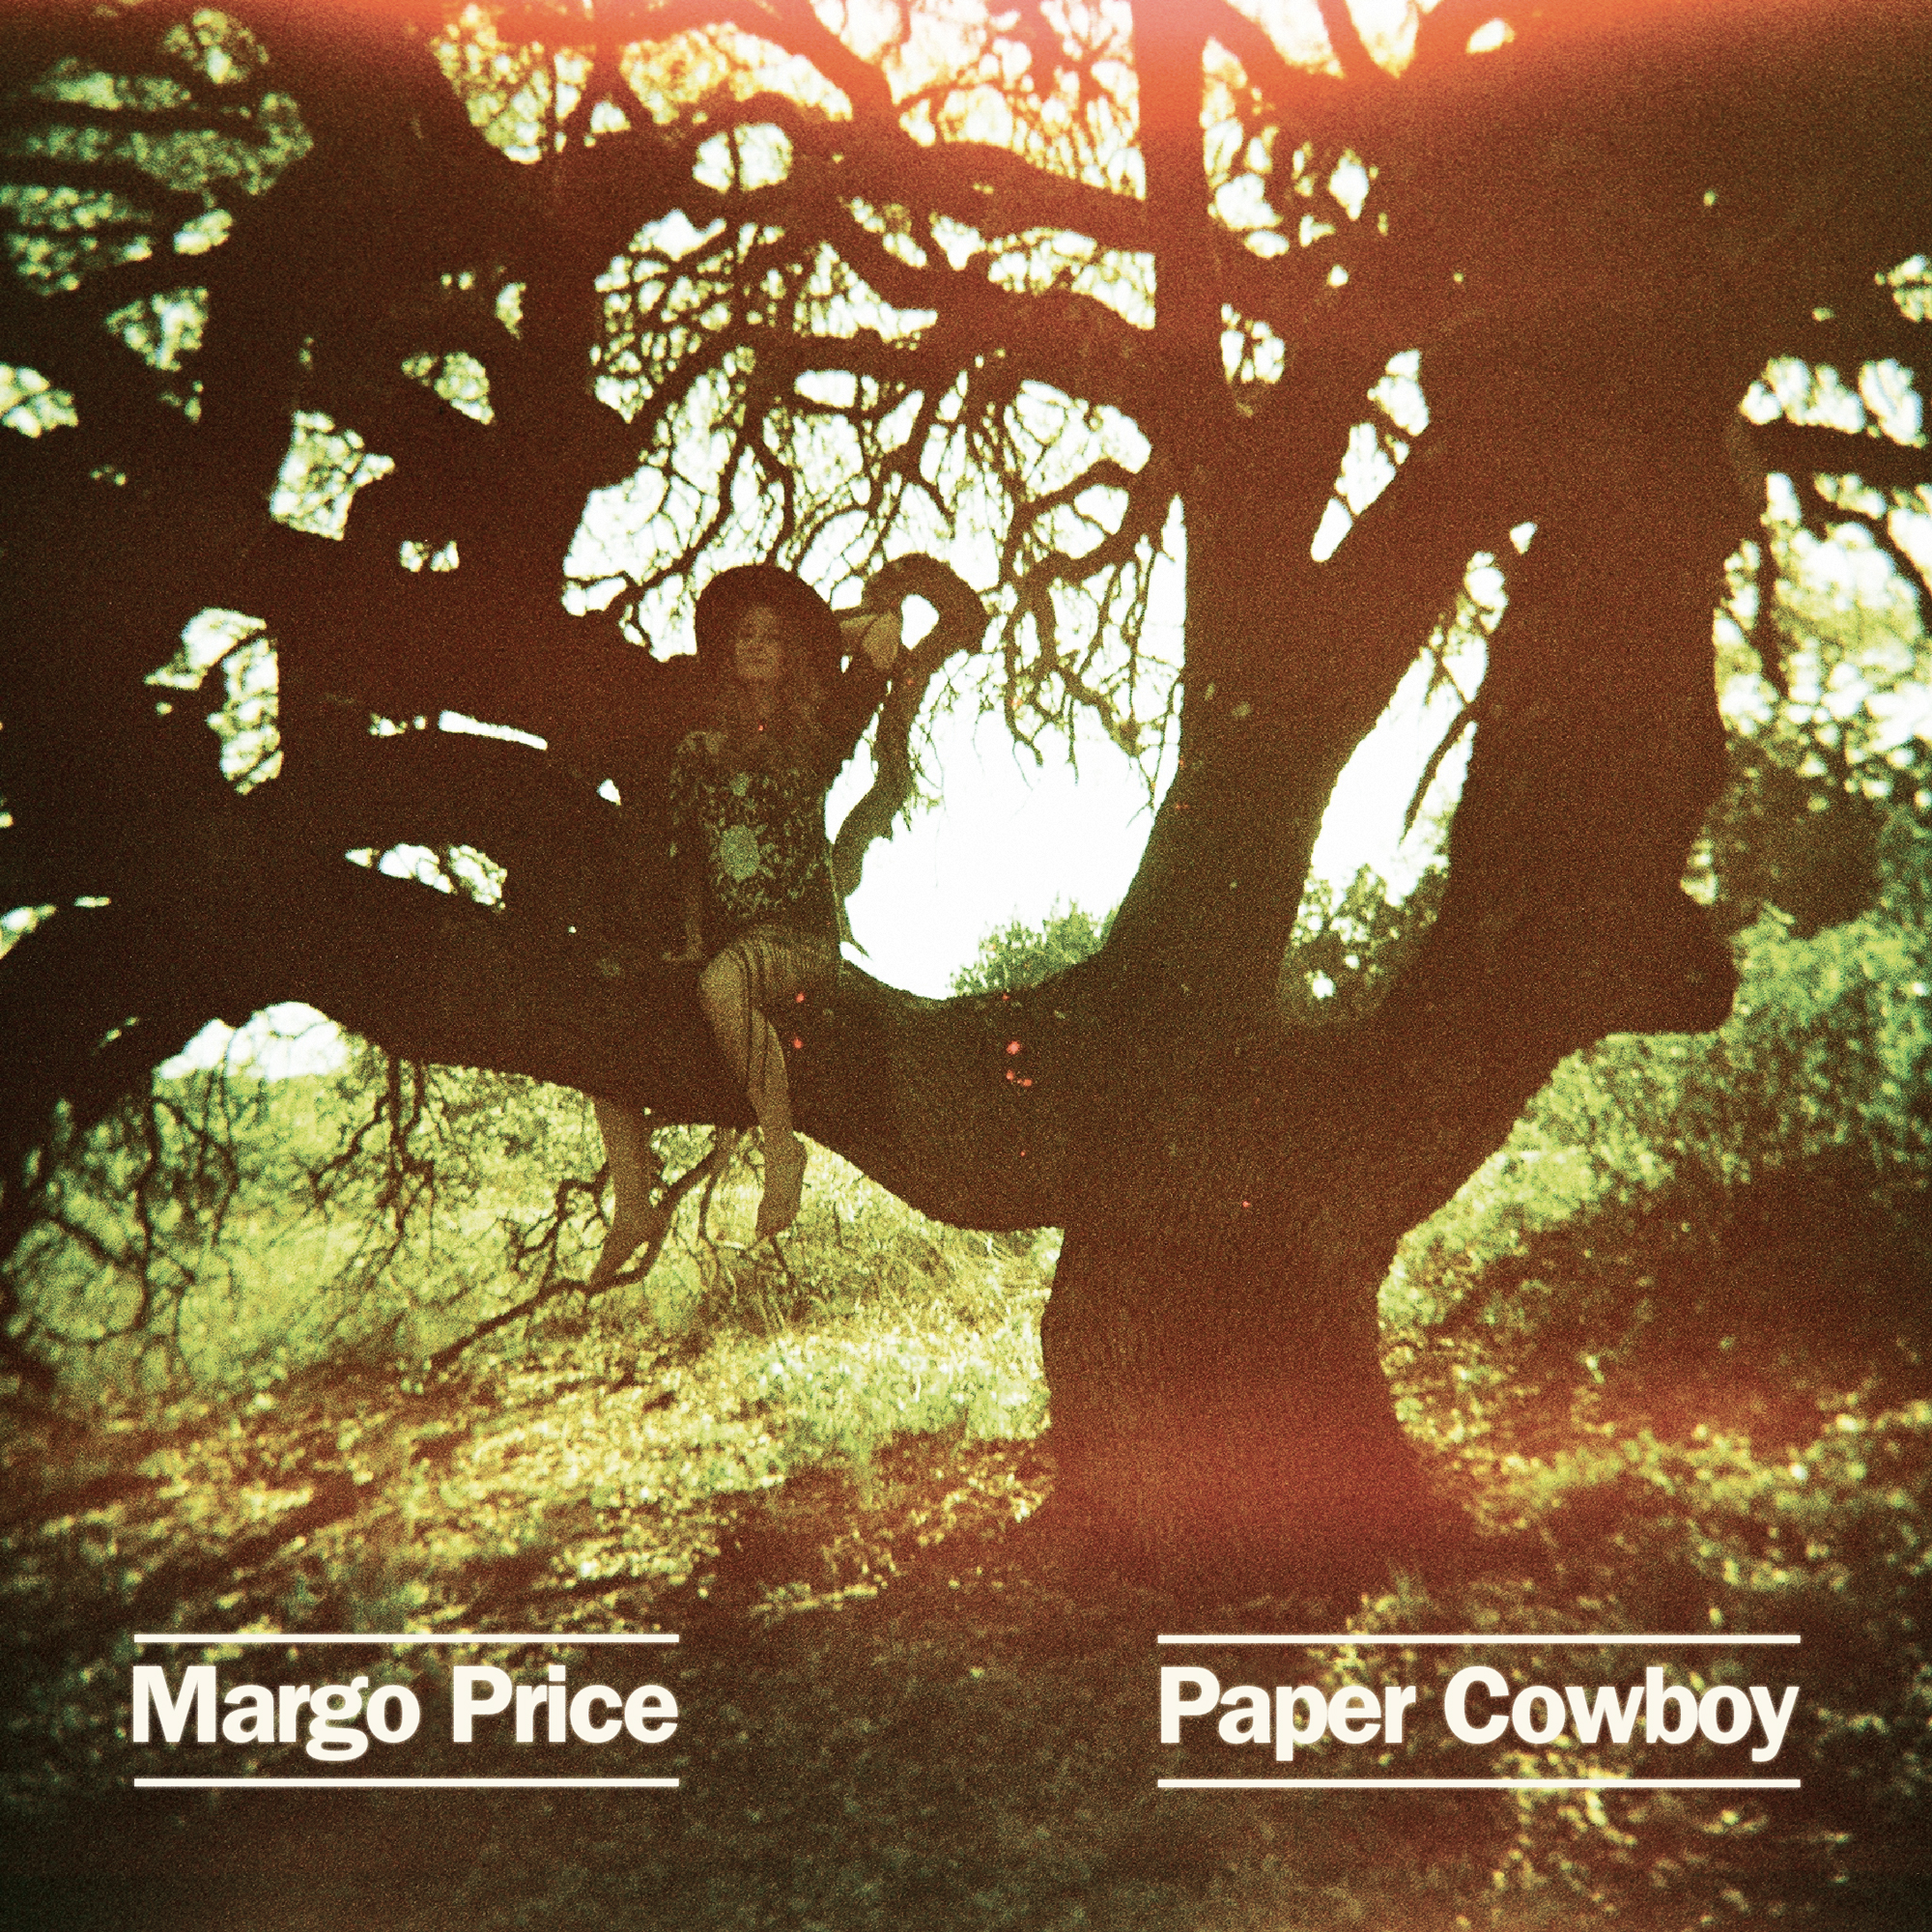 Margo Price's Paper Cowboy EP